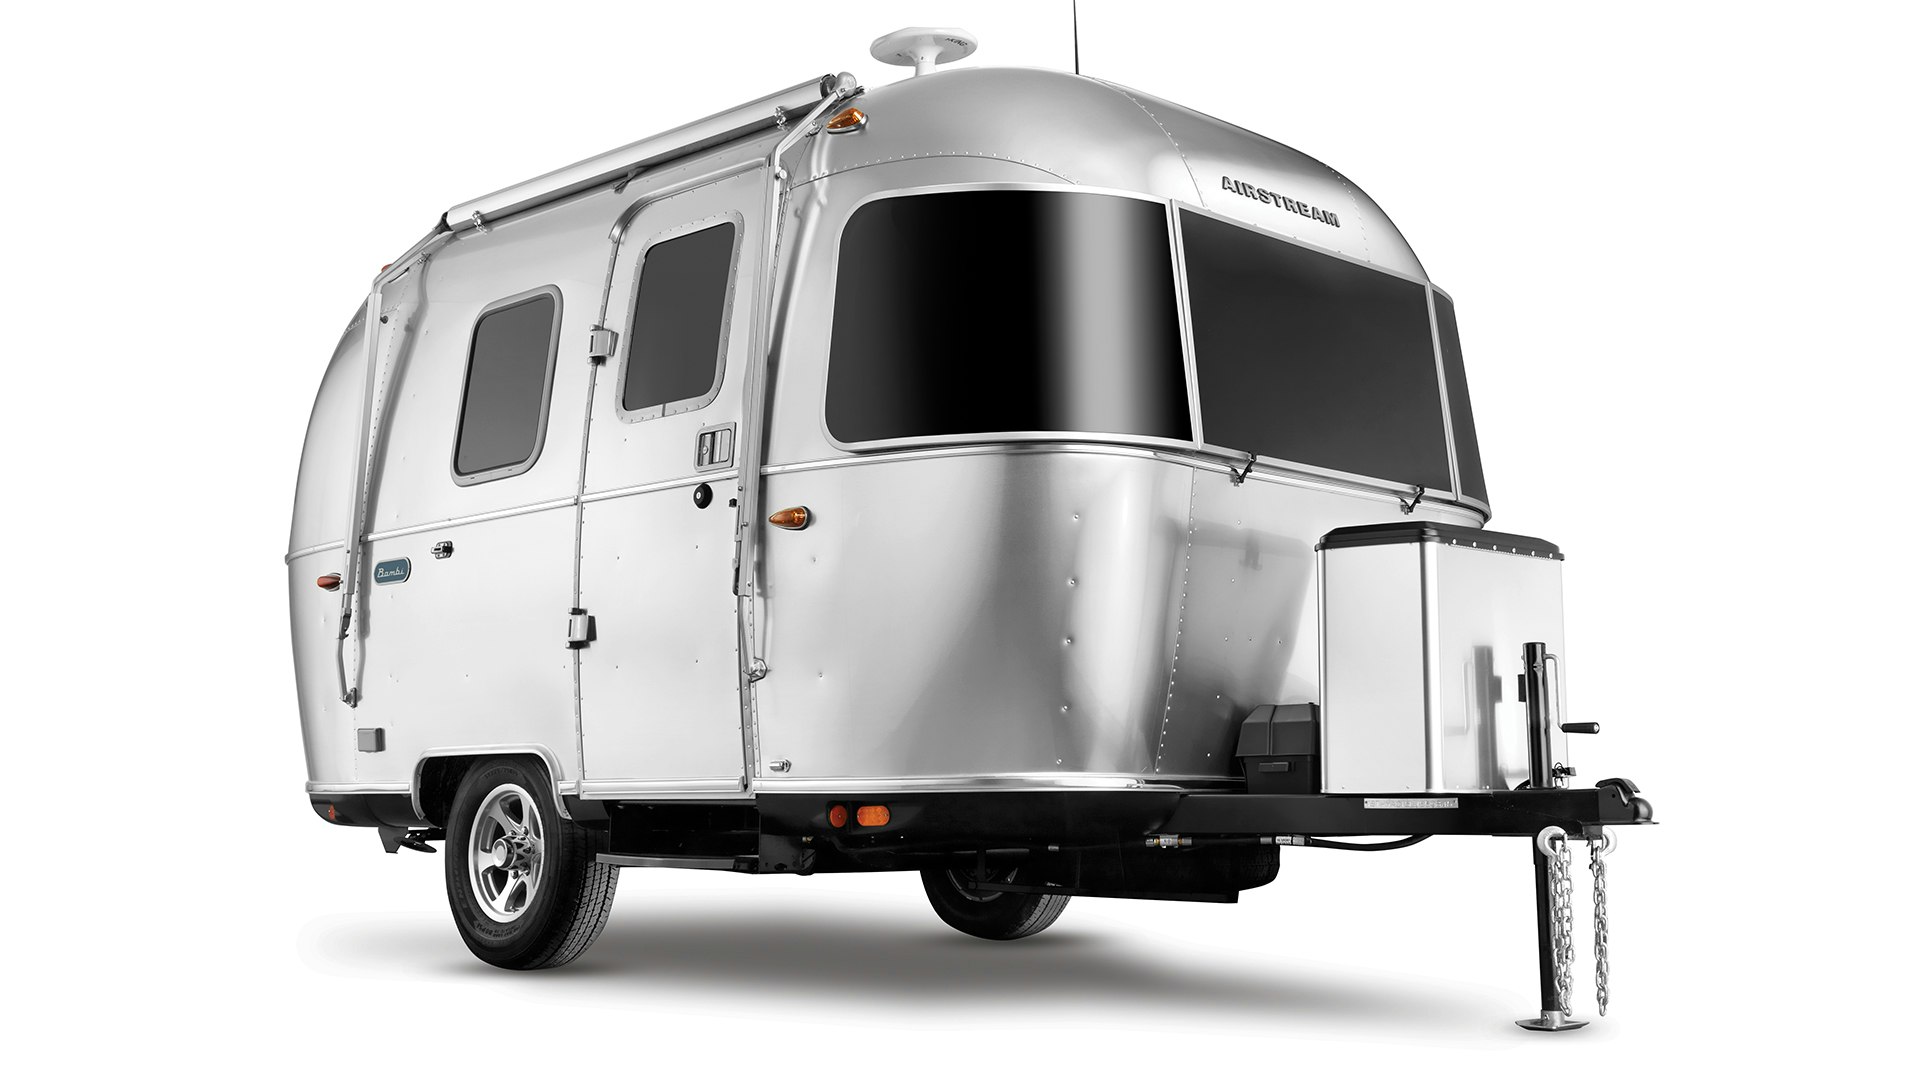 Airstream Bambi | Lightweight Camper Trailer | Small RV Travel Trailer